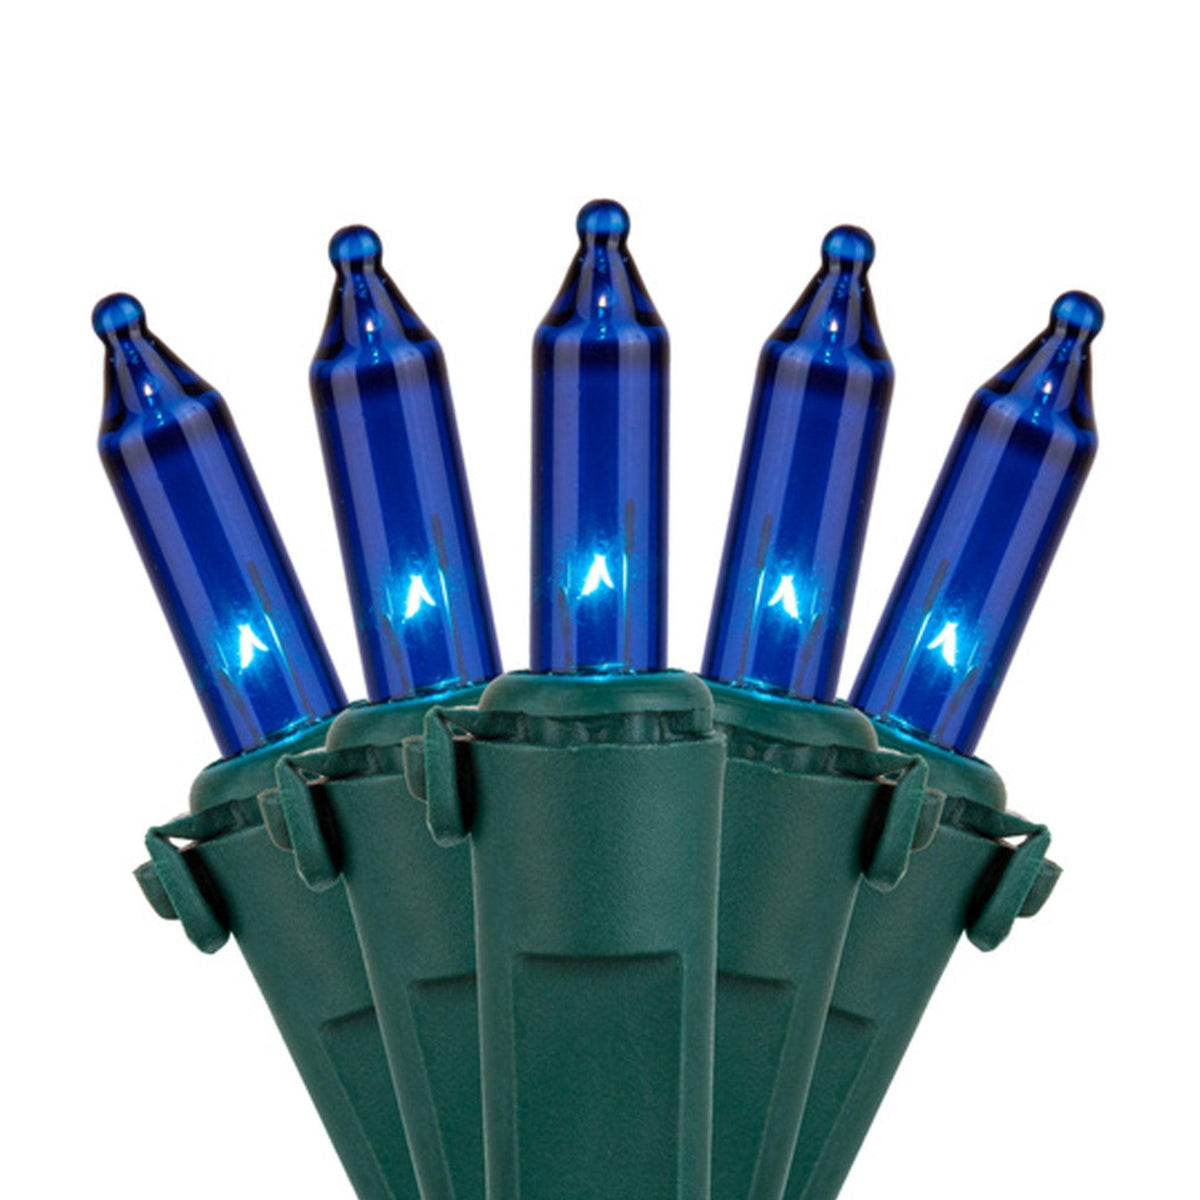 Buy Brand New Blue Mini Christmas String Lights Sets at Lee Display